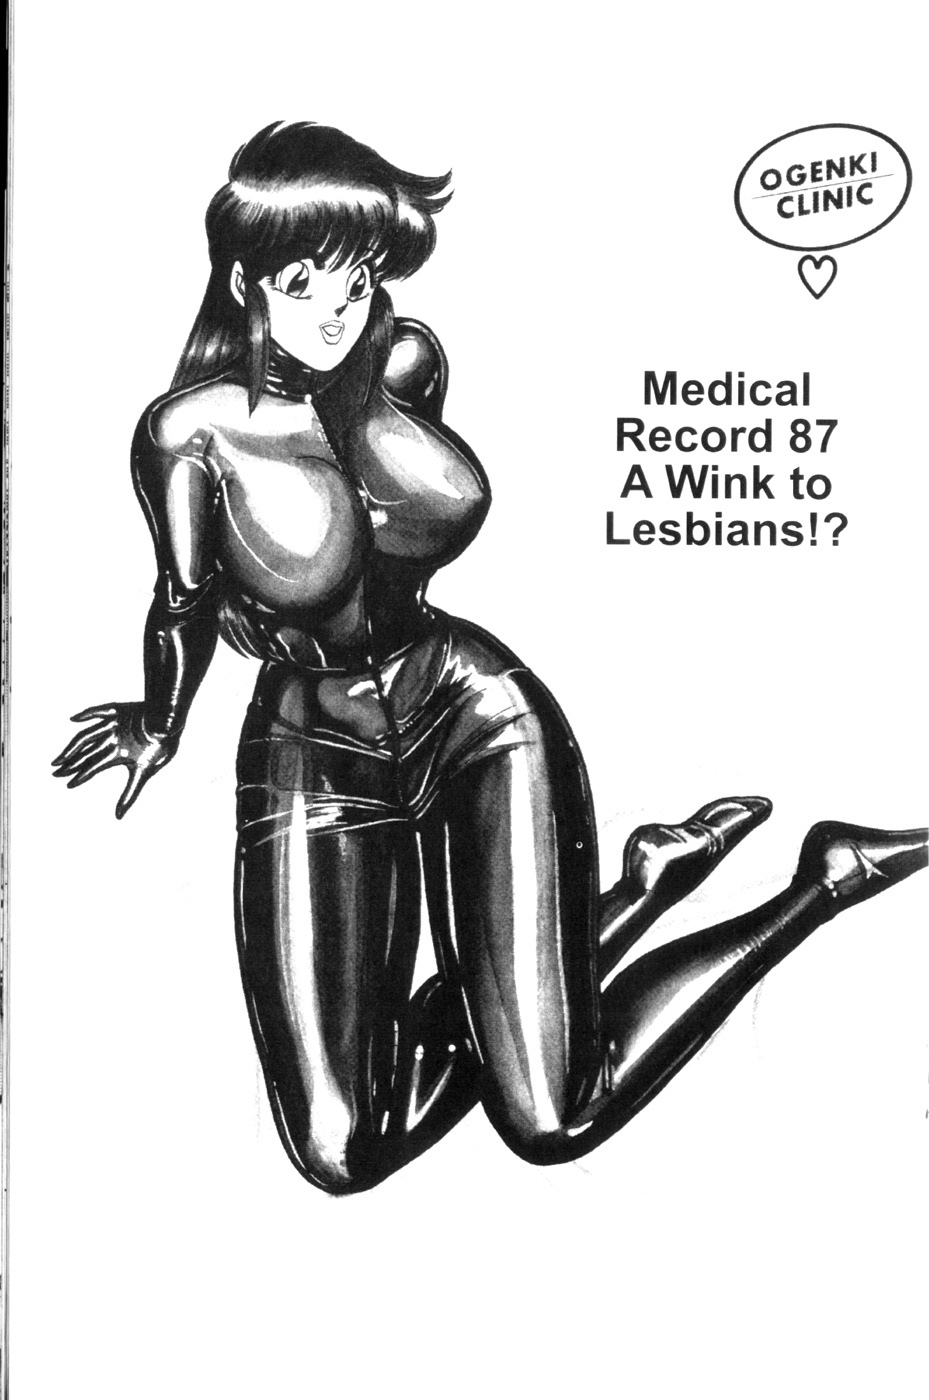 Ogenki Clinic Vol.6 164 hentai manga